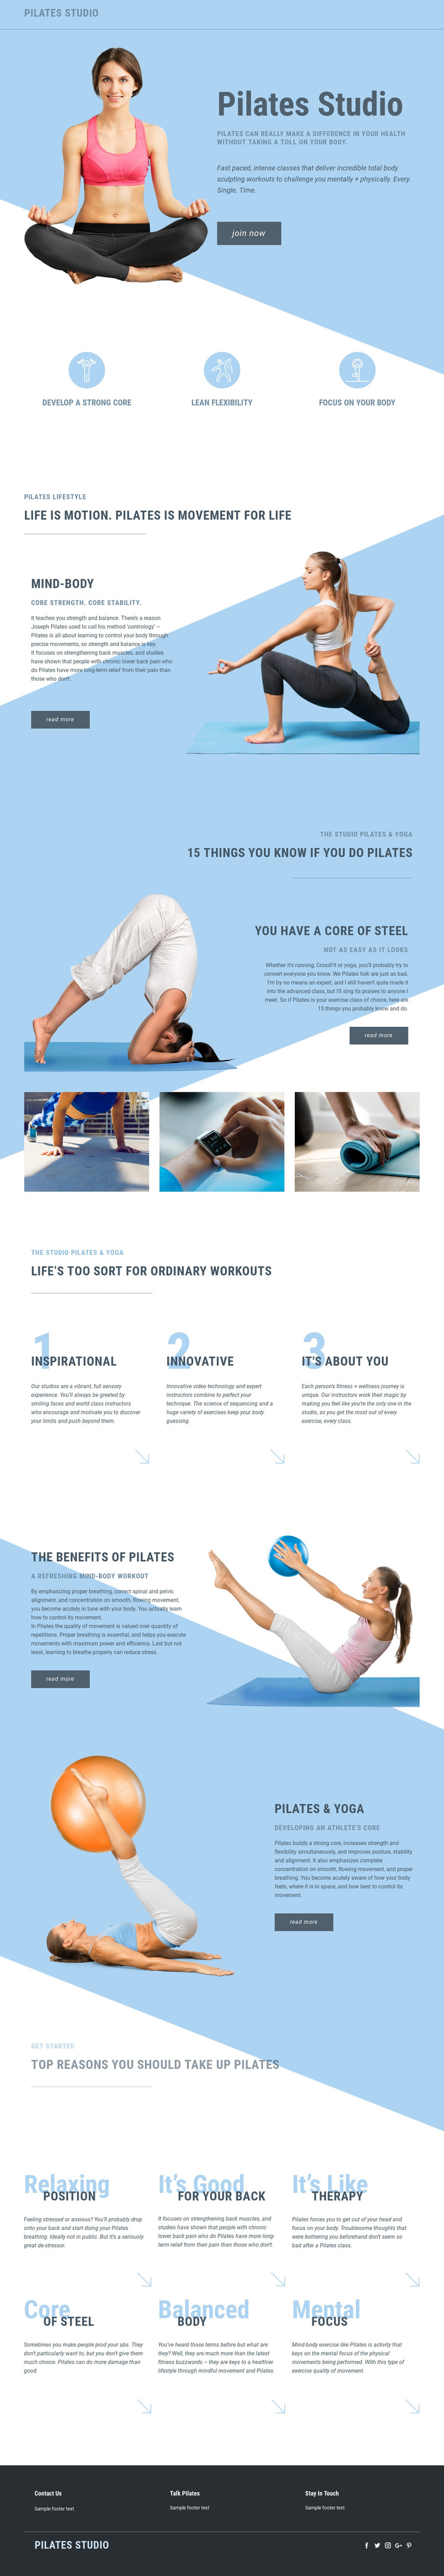 Pilates studio and sports Homepage Design